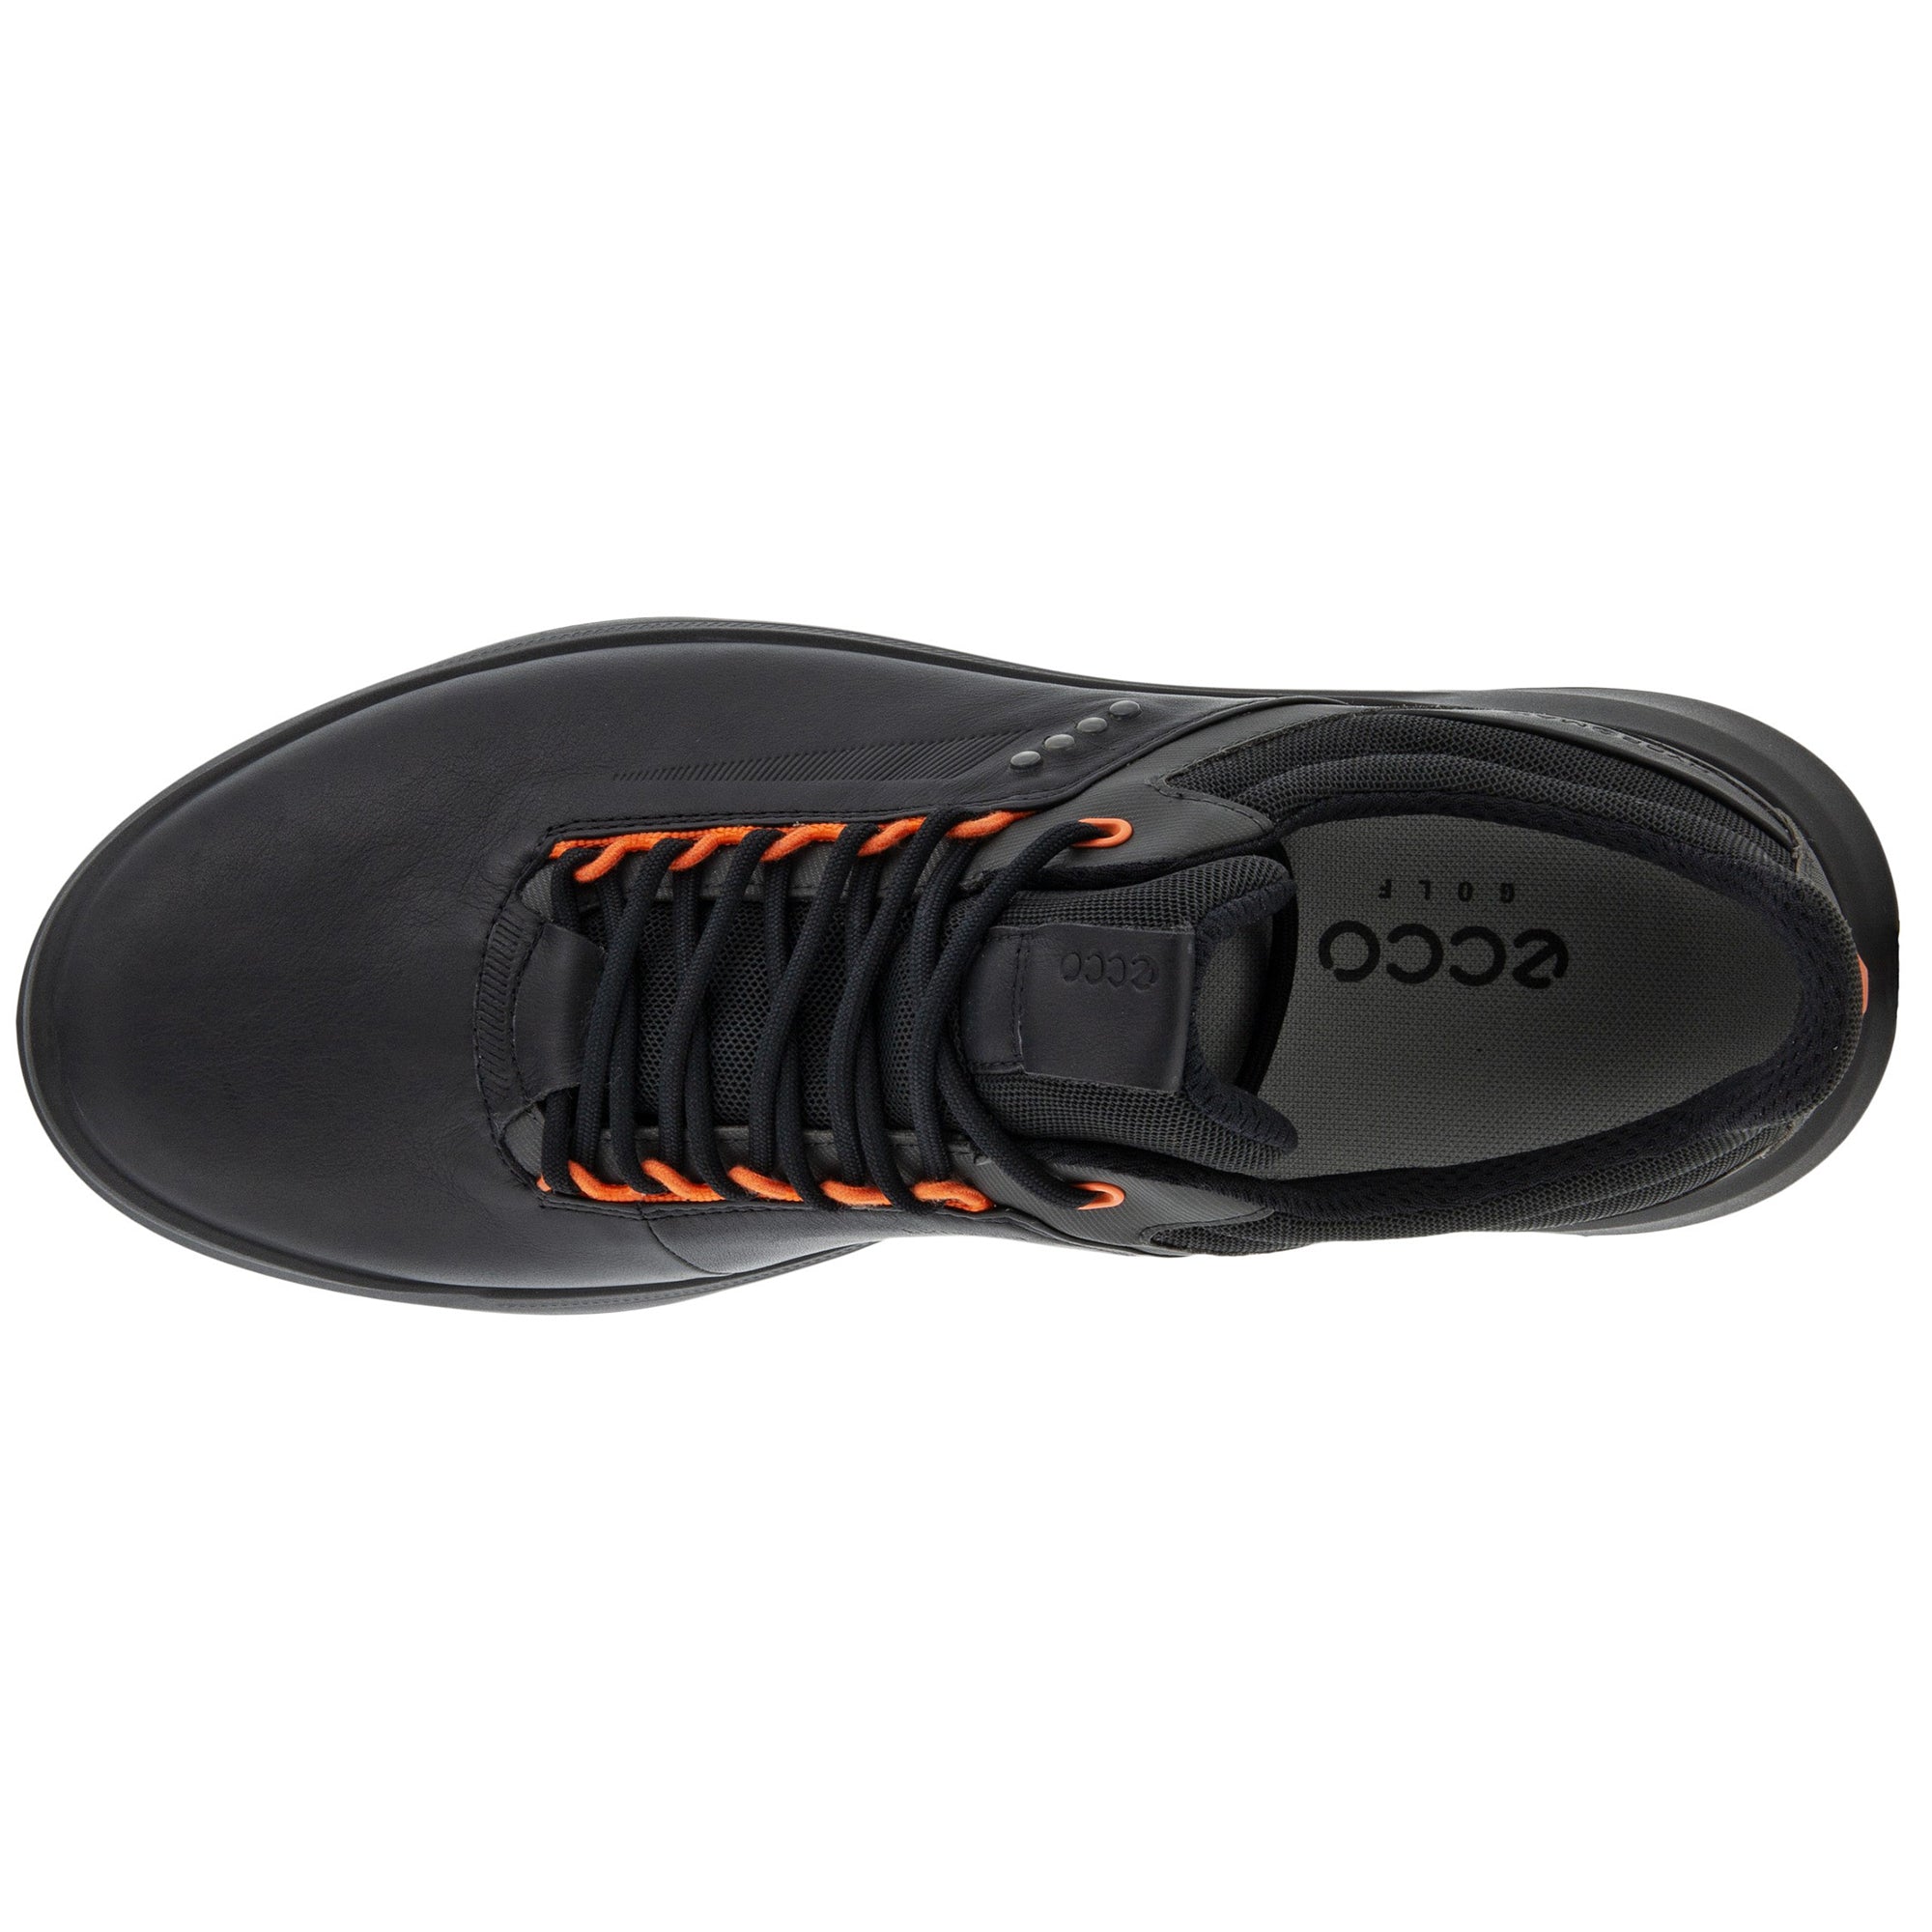 Creation race Authorization Ecco Core Golf Shoes 100804 Black 51052 | Function18 | Restrictedgs